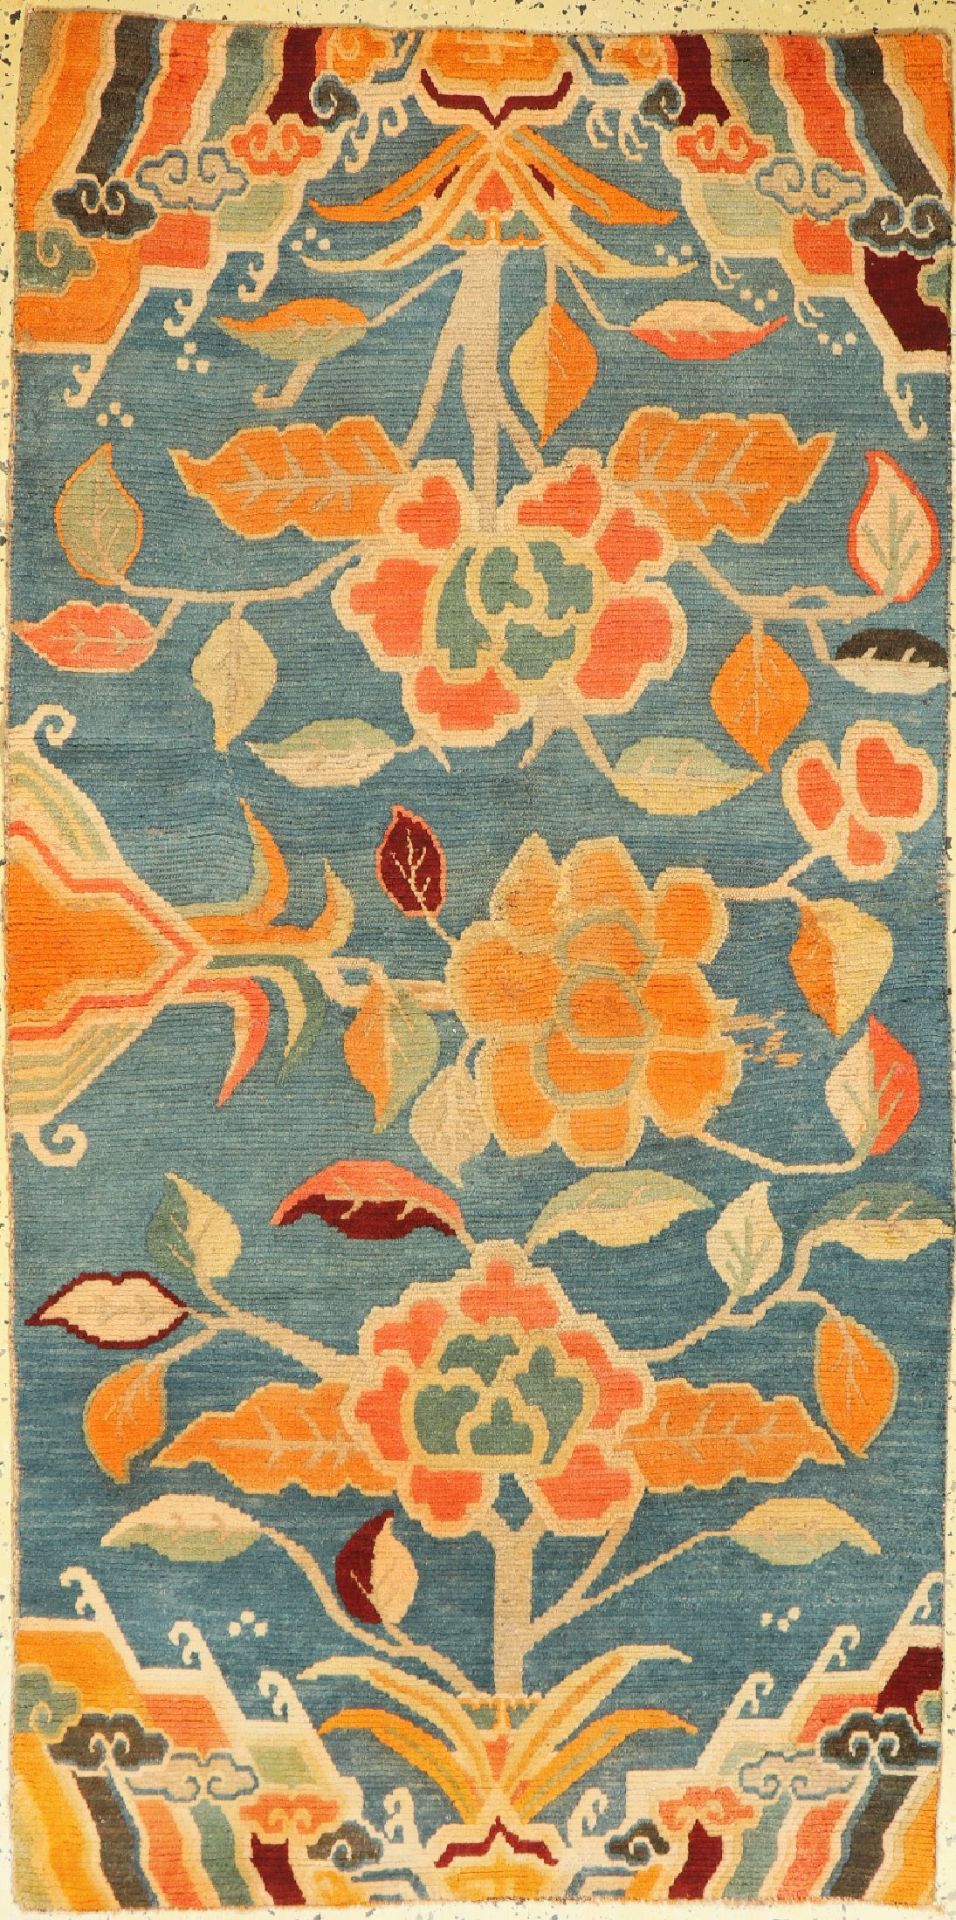 Shigatse'Khaden', Lotus, Tibet, um 1920/1930, Wolle auf